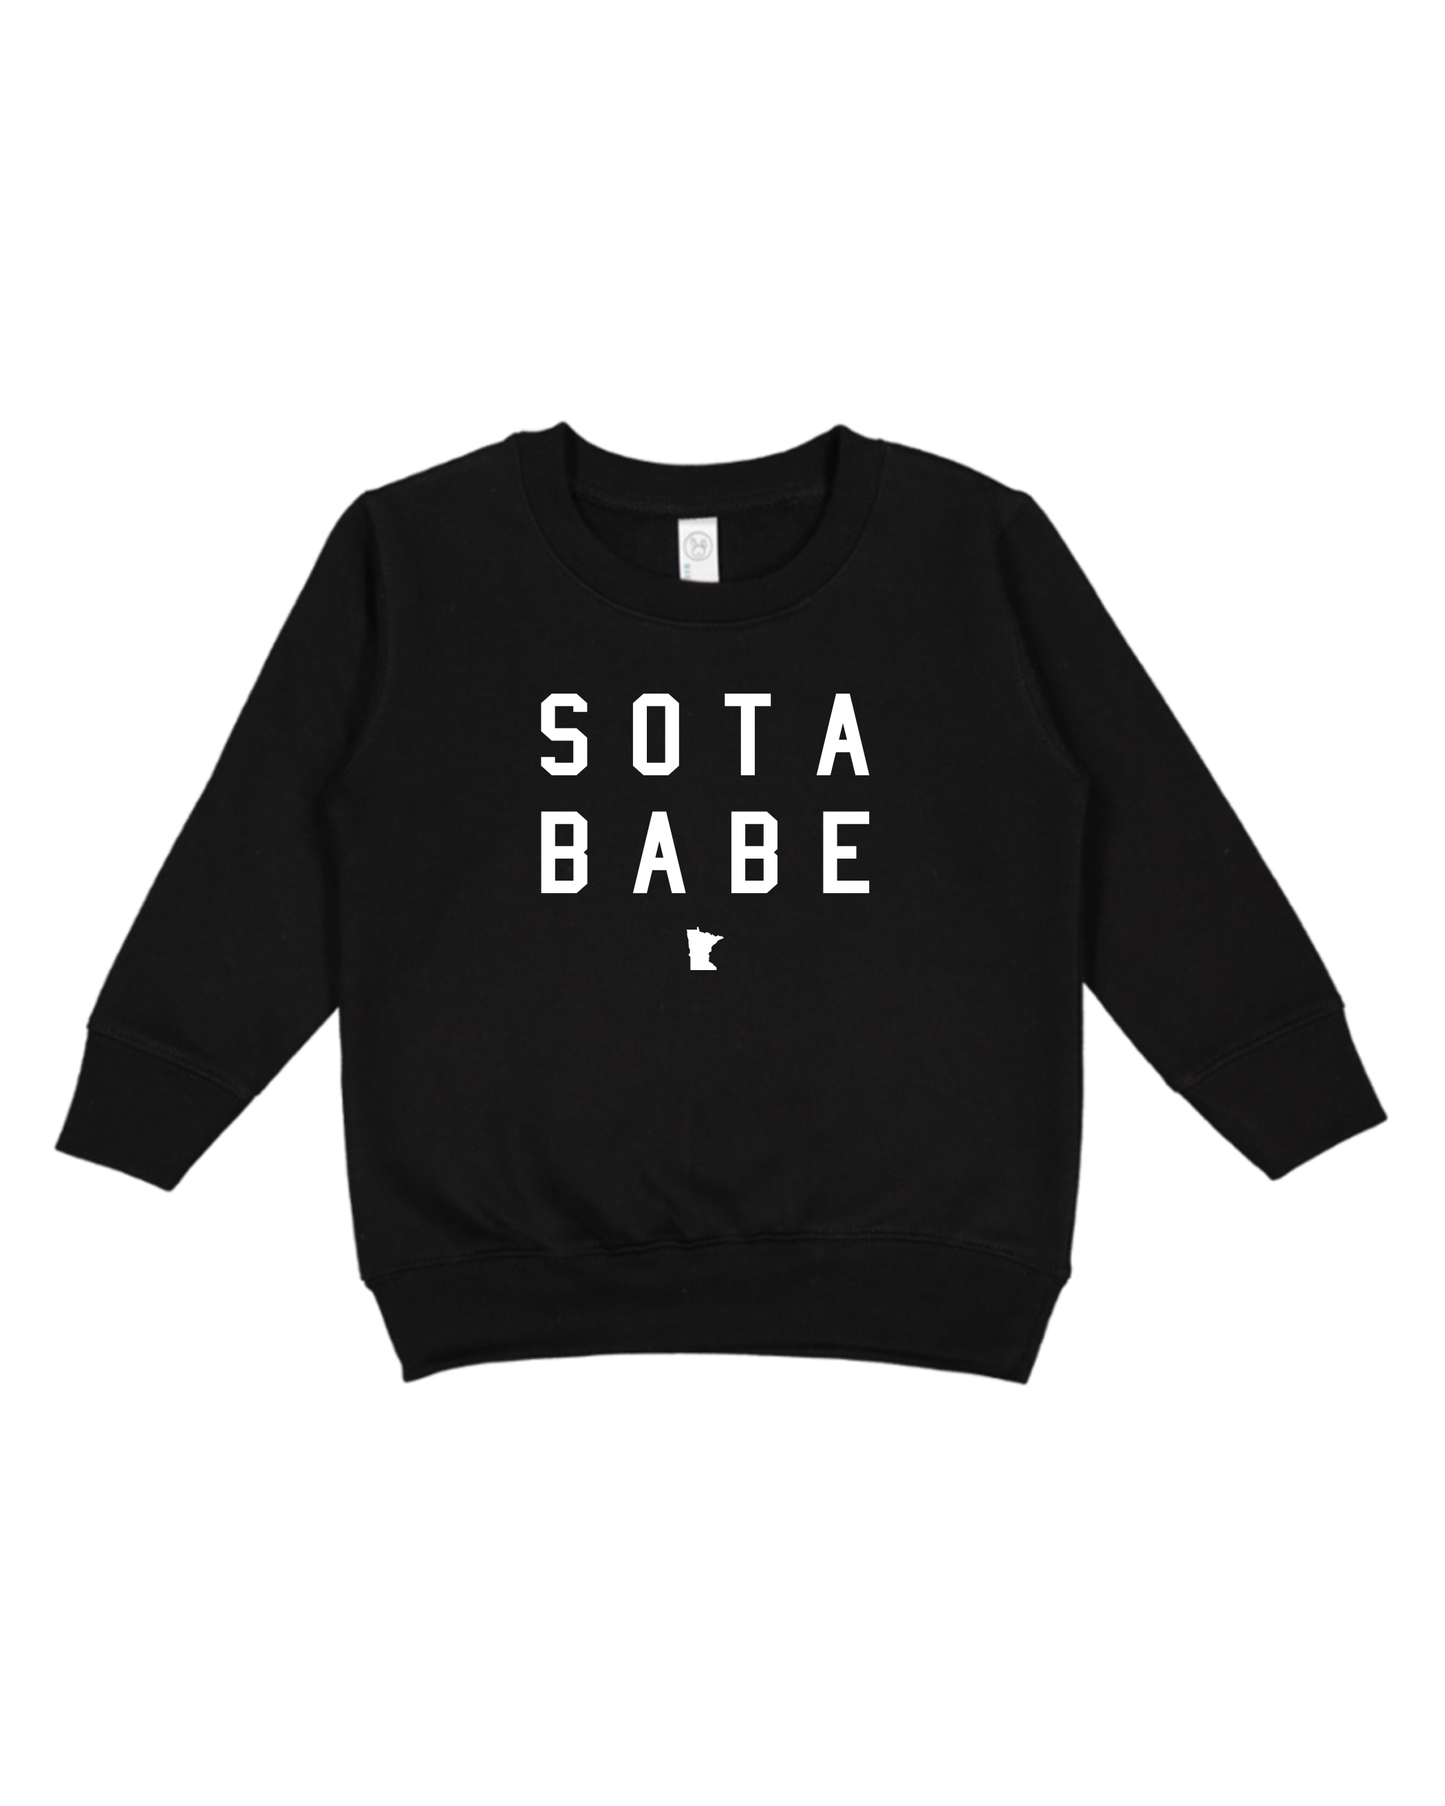 Sota Babe Crew Neck Sweatshirt FF Girls 2T